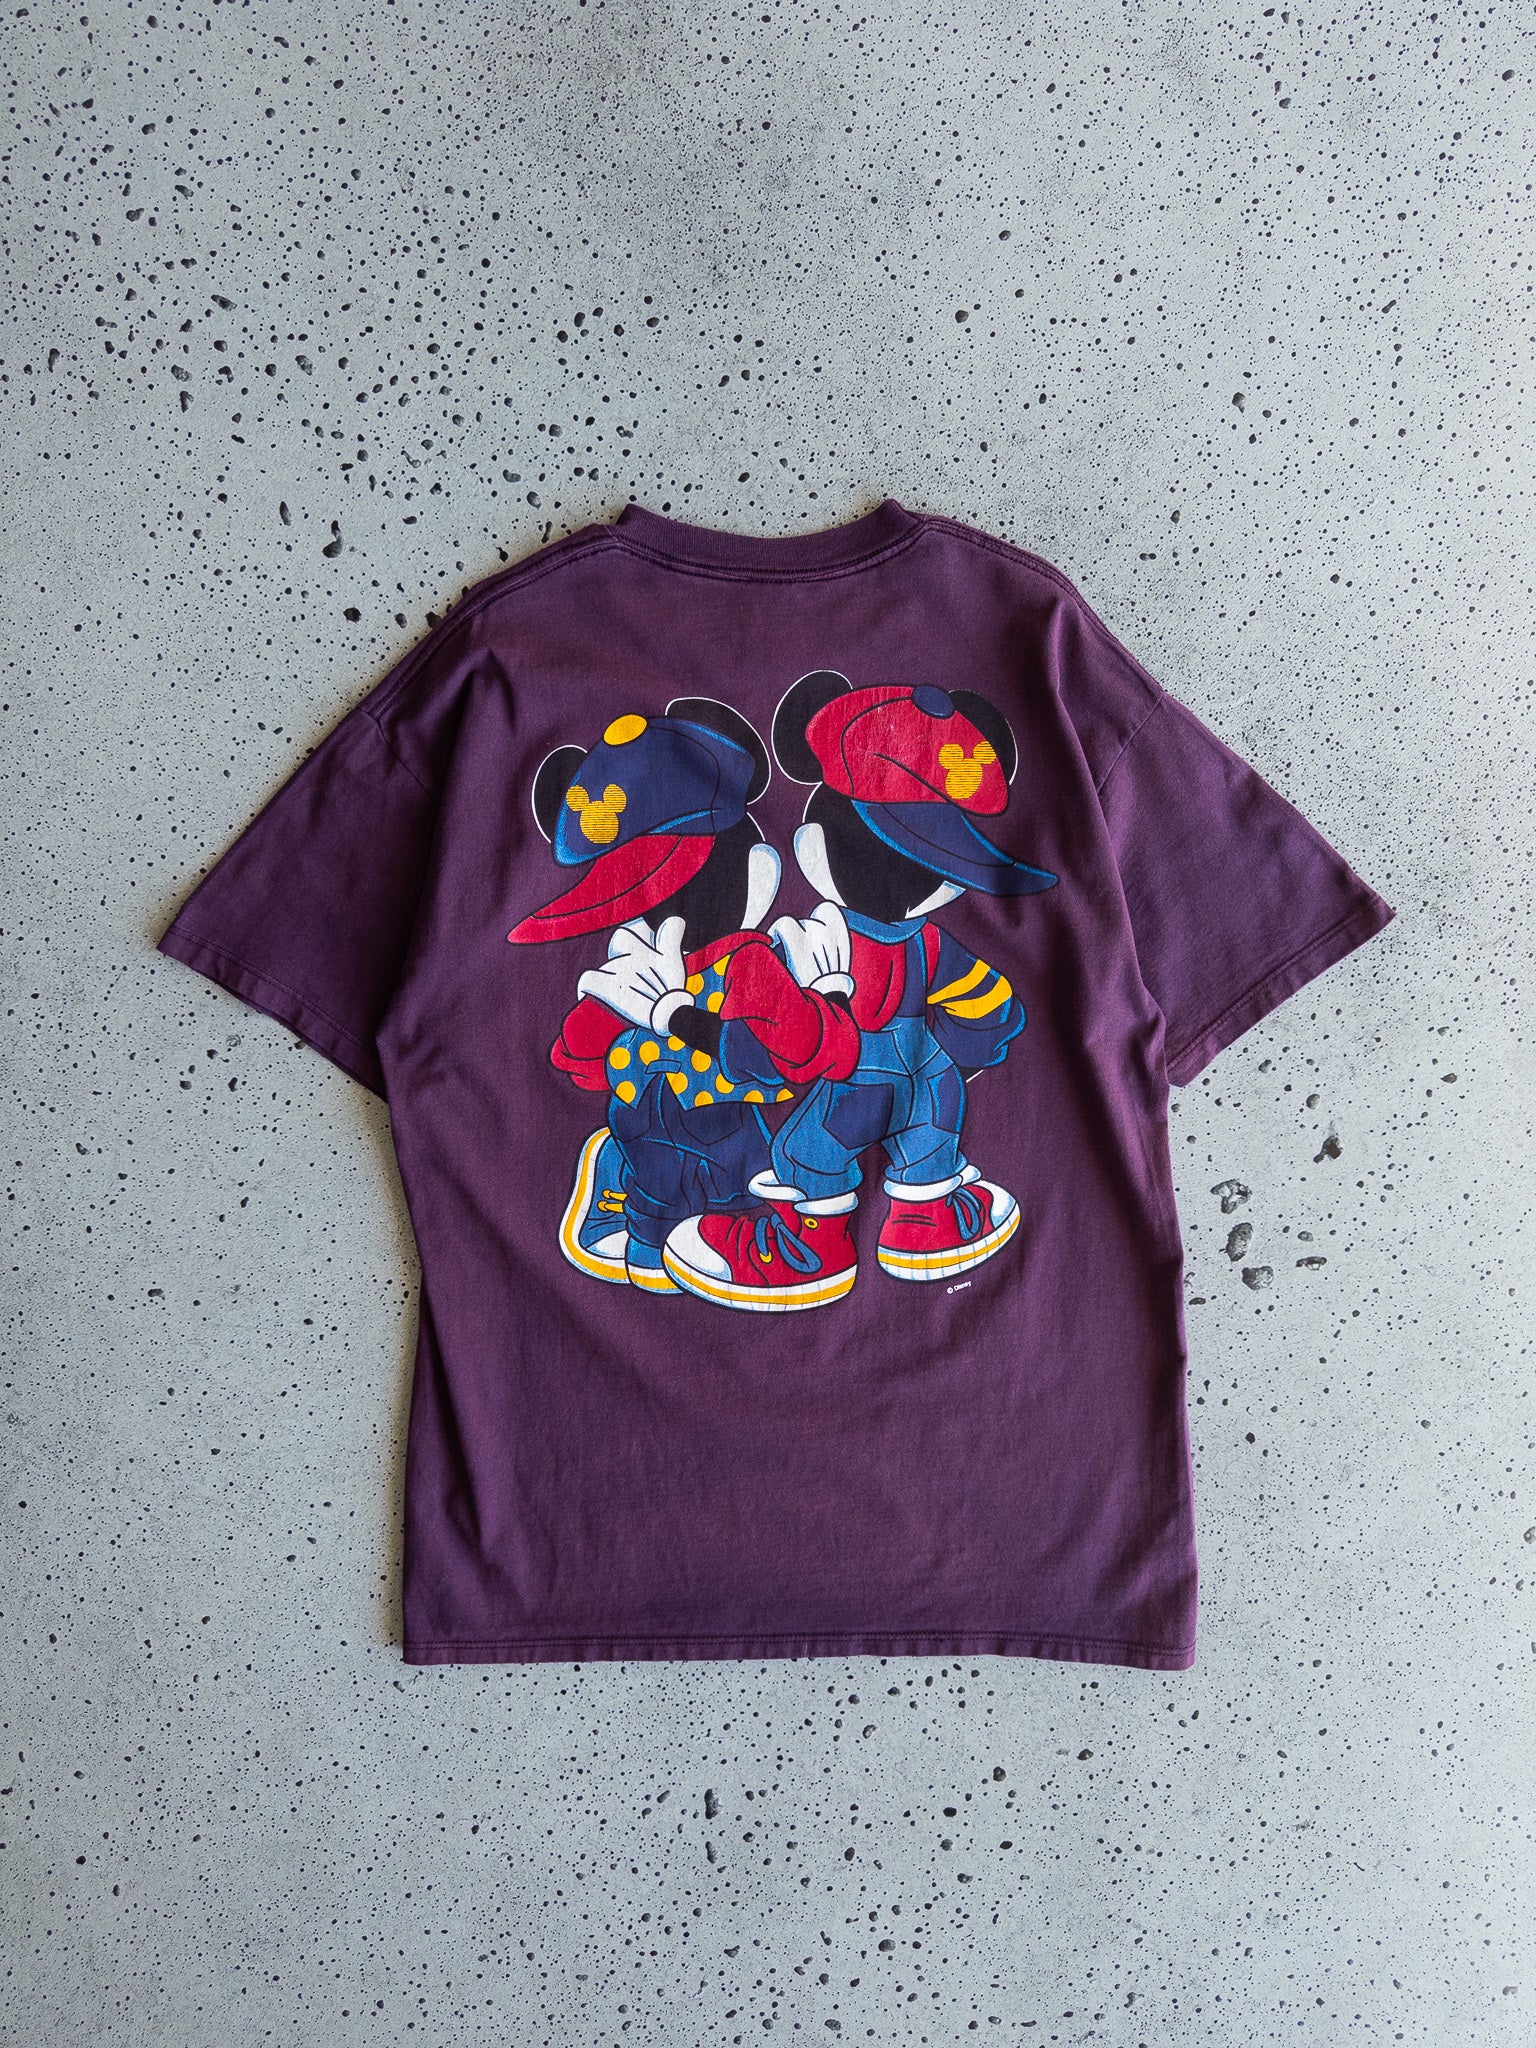 Vintage Mickey & Minnie Florida Tee (XL)